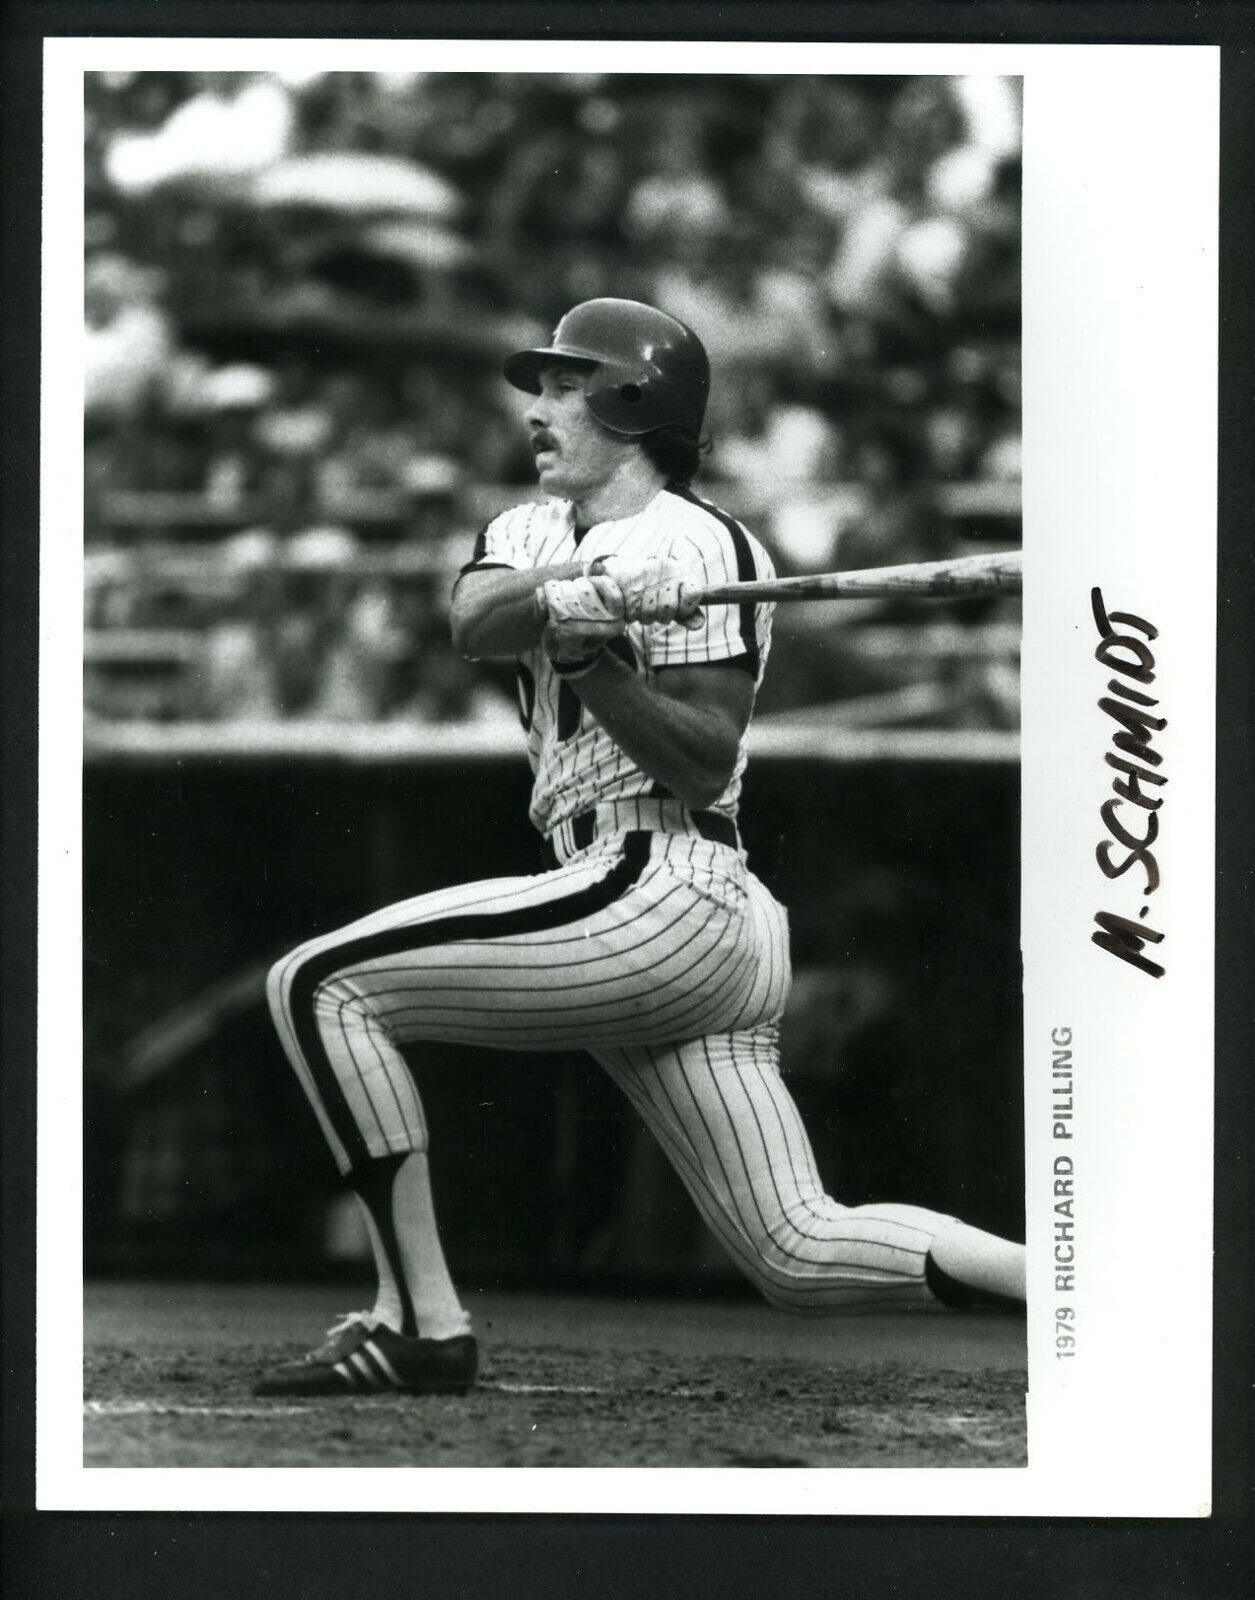 Mike Schmidt 1978 batting action Press Original Photo Poster painting Philadelphia Phillies